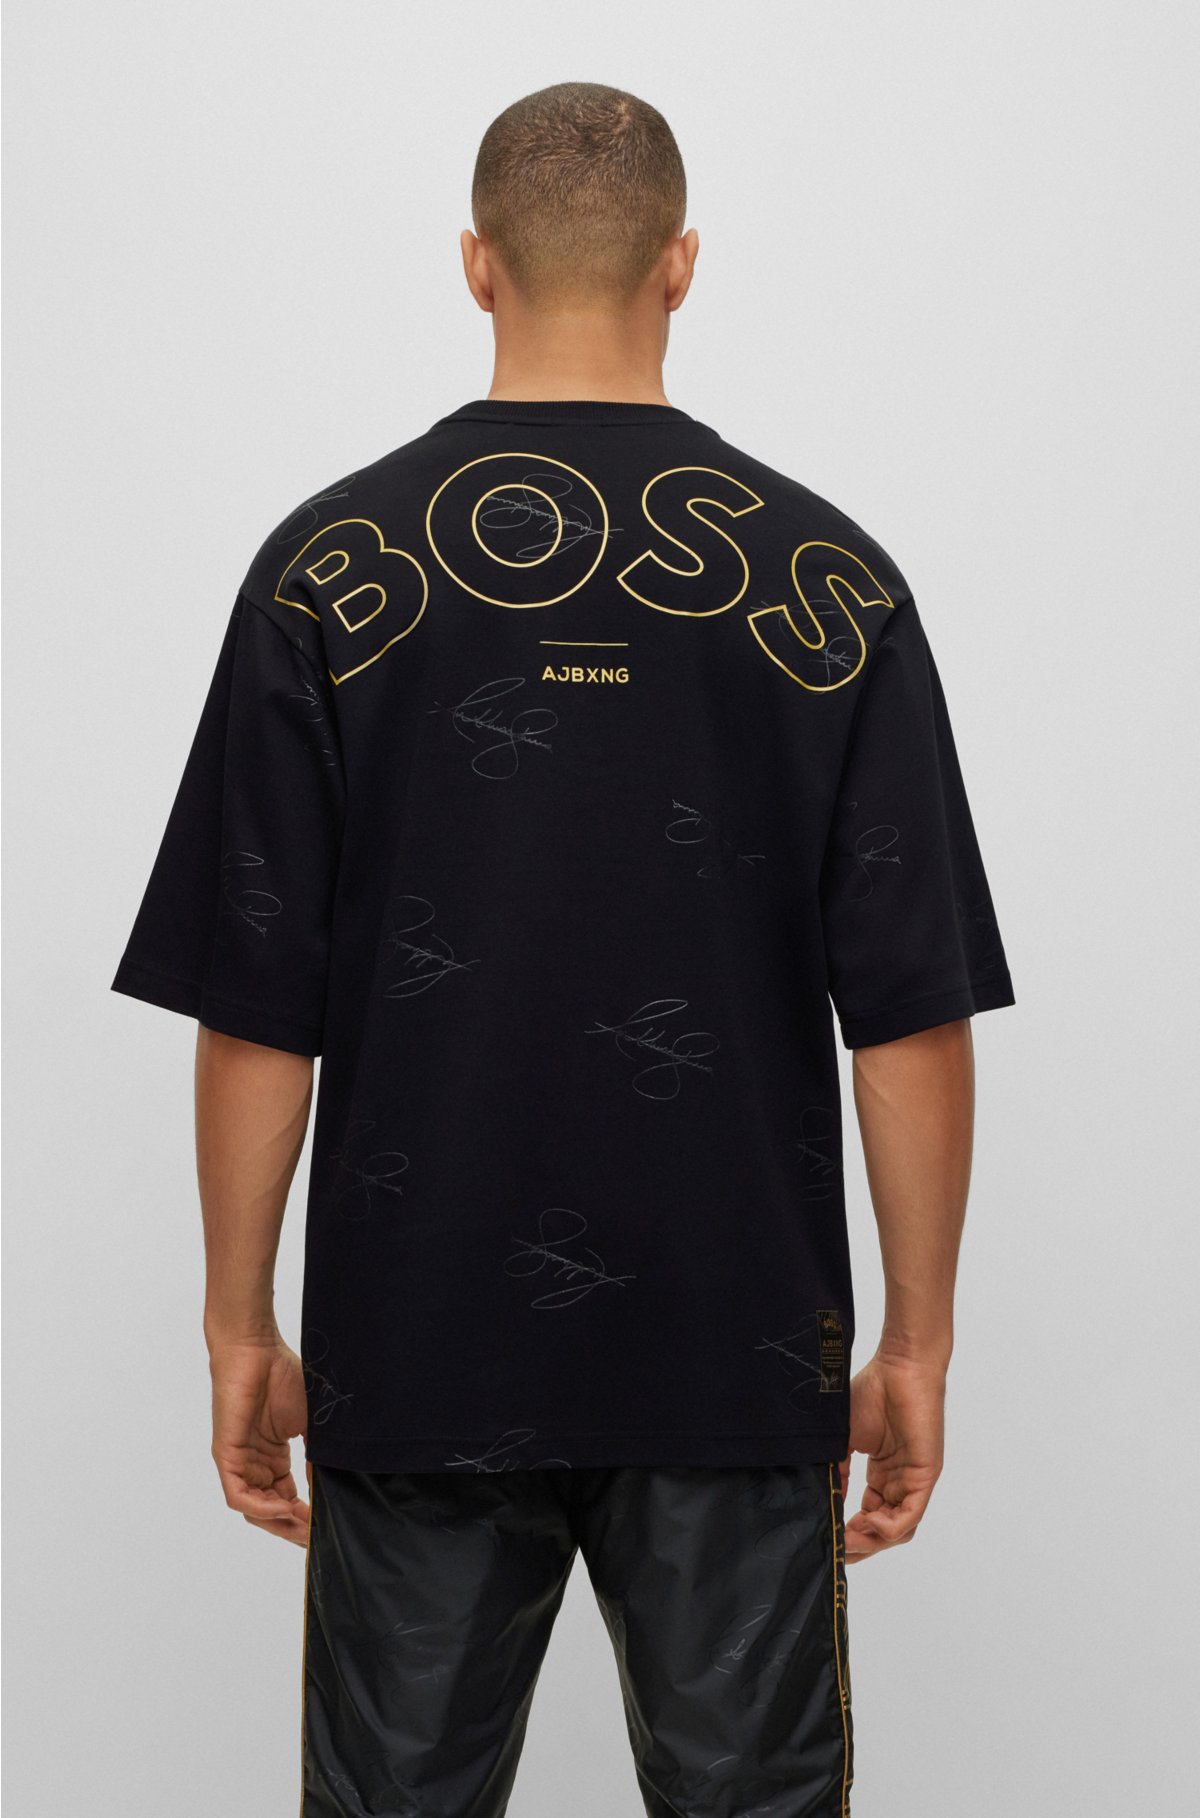 BOSS - BOSS with signatures interlock-cotton branding T-shirt and x collaborative AJBXNG